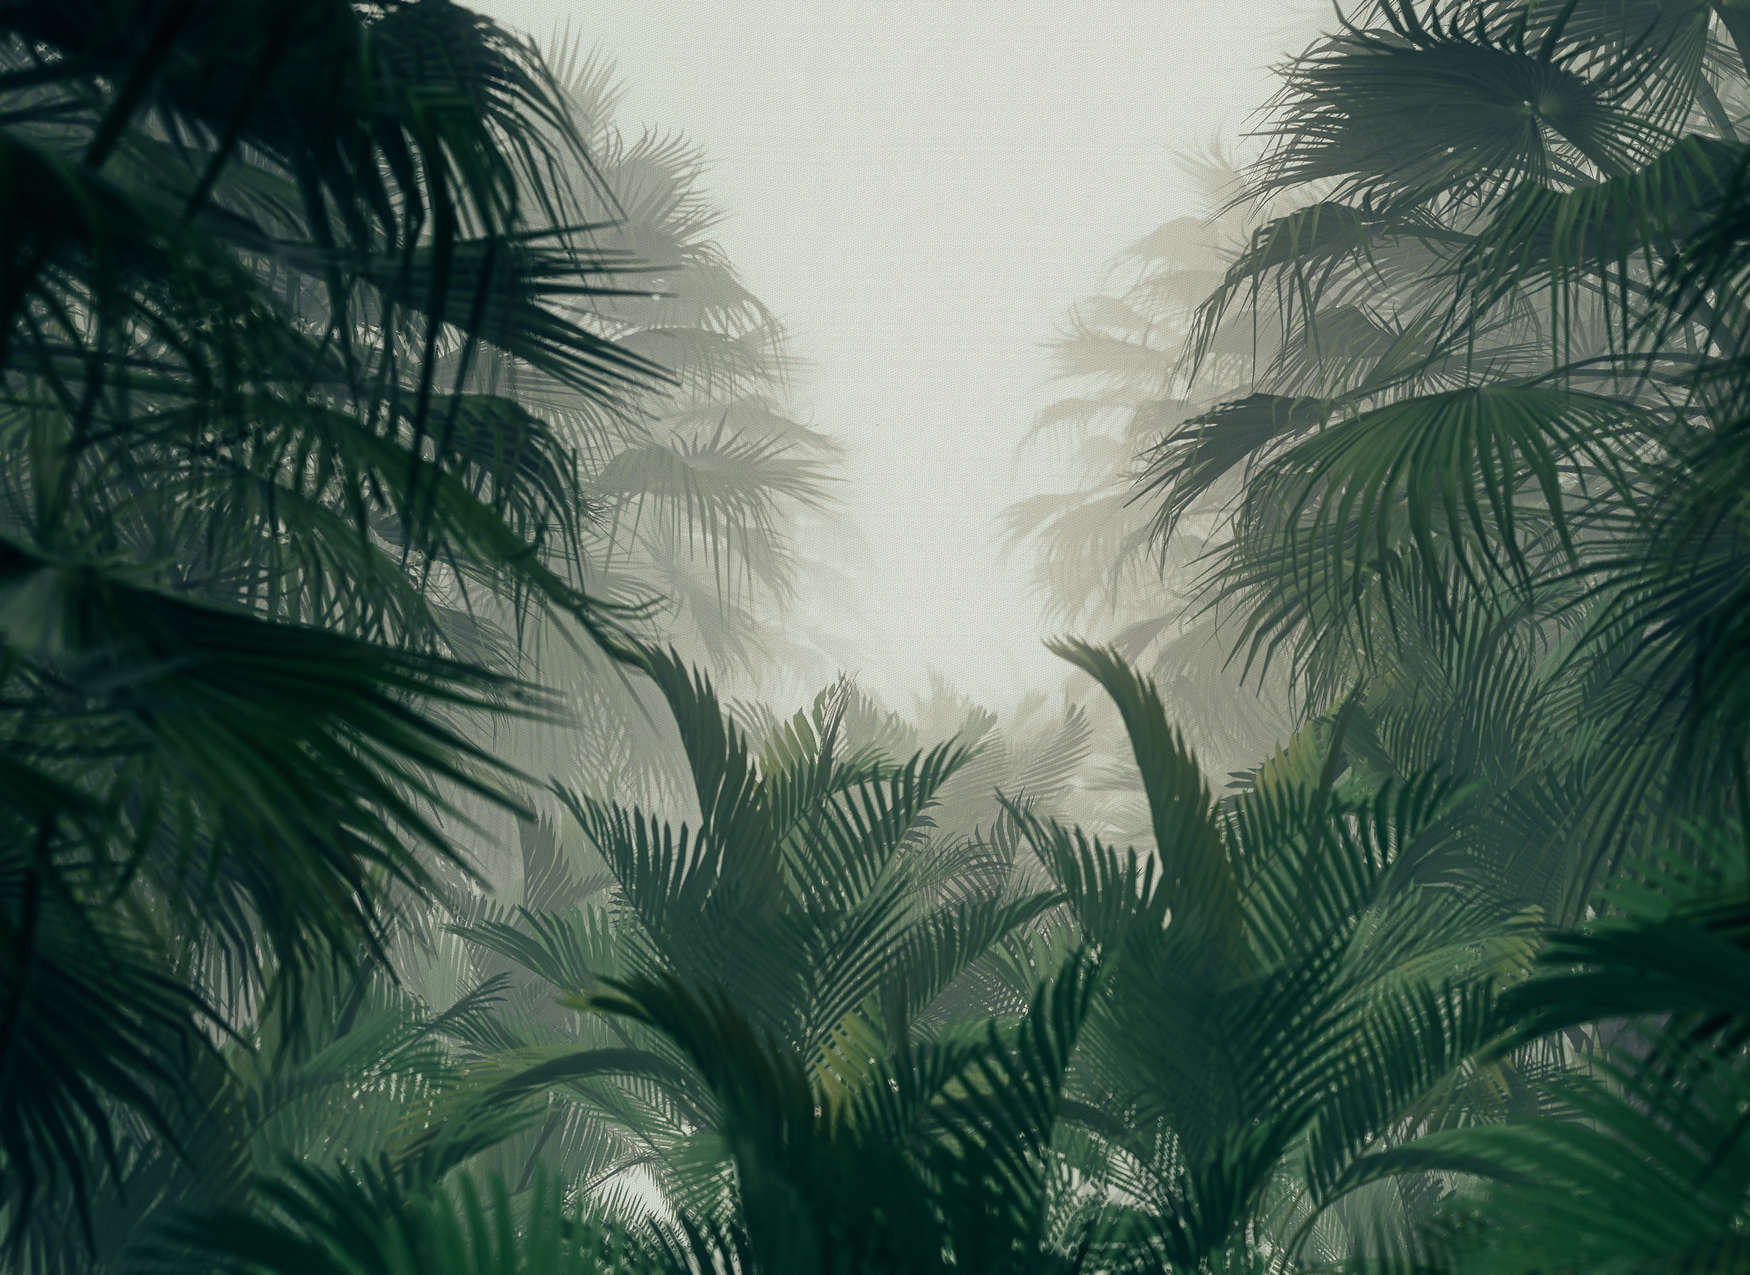             Rainy Season Jungle View Wallpaper - Green, Grey
        